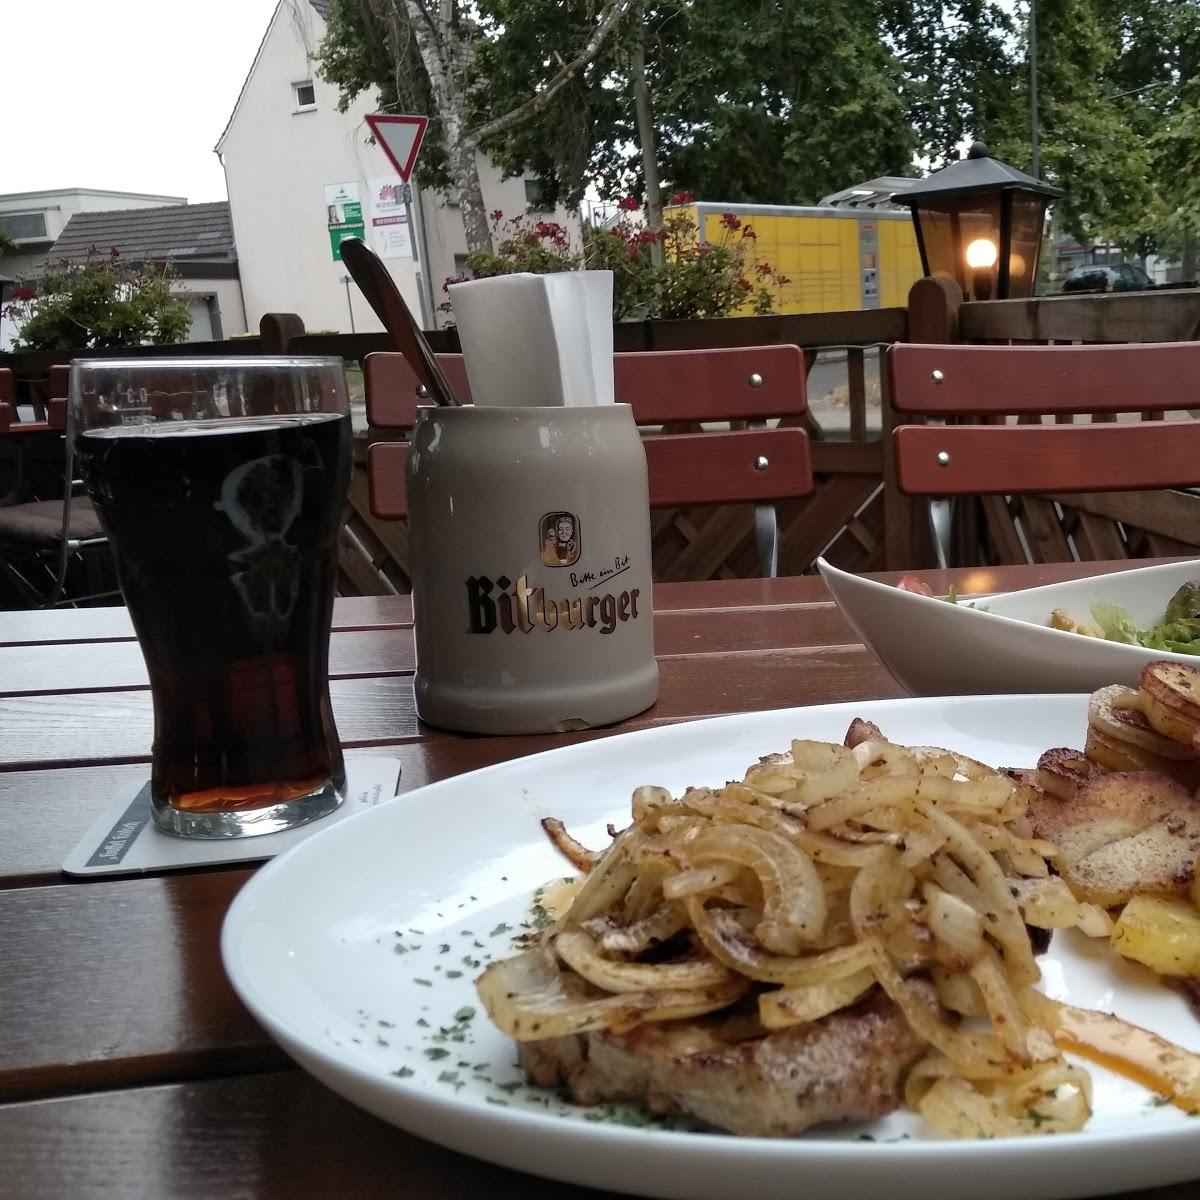 Restaurant "Marktstube" in Troisdorf